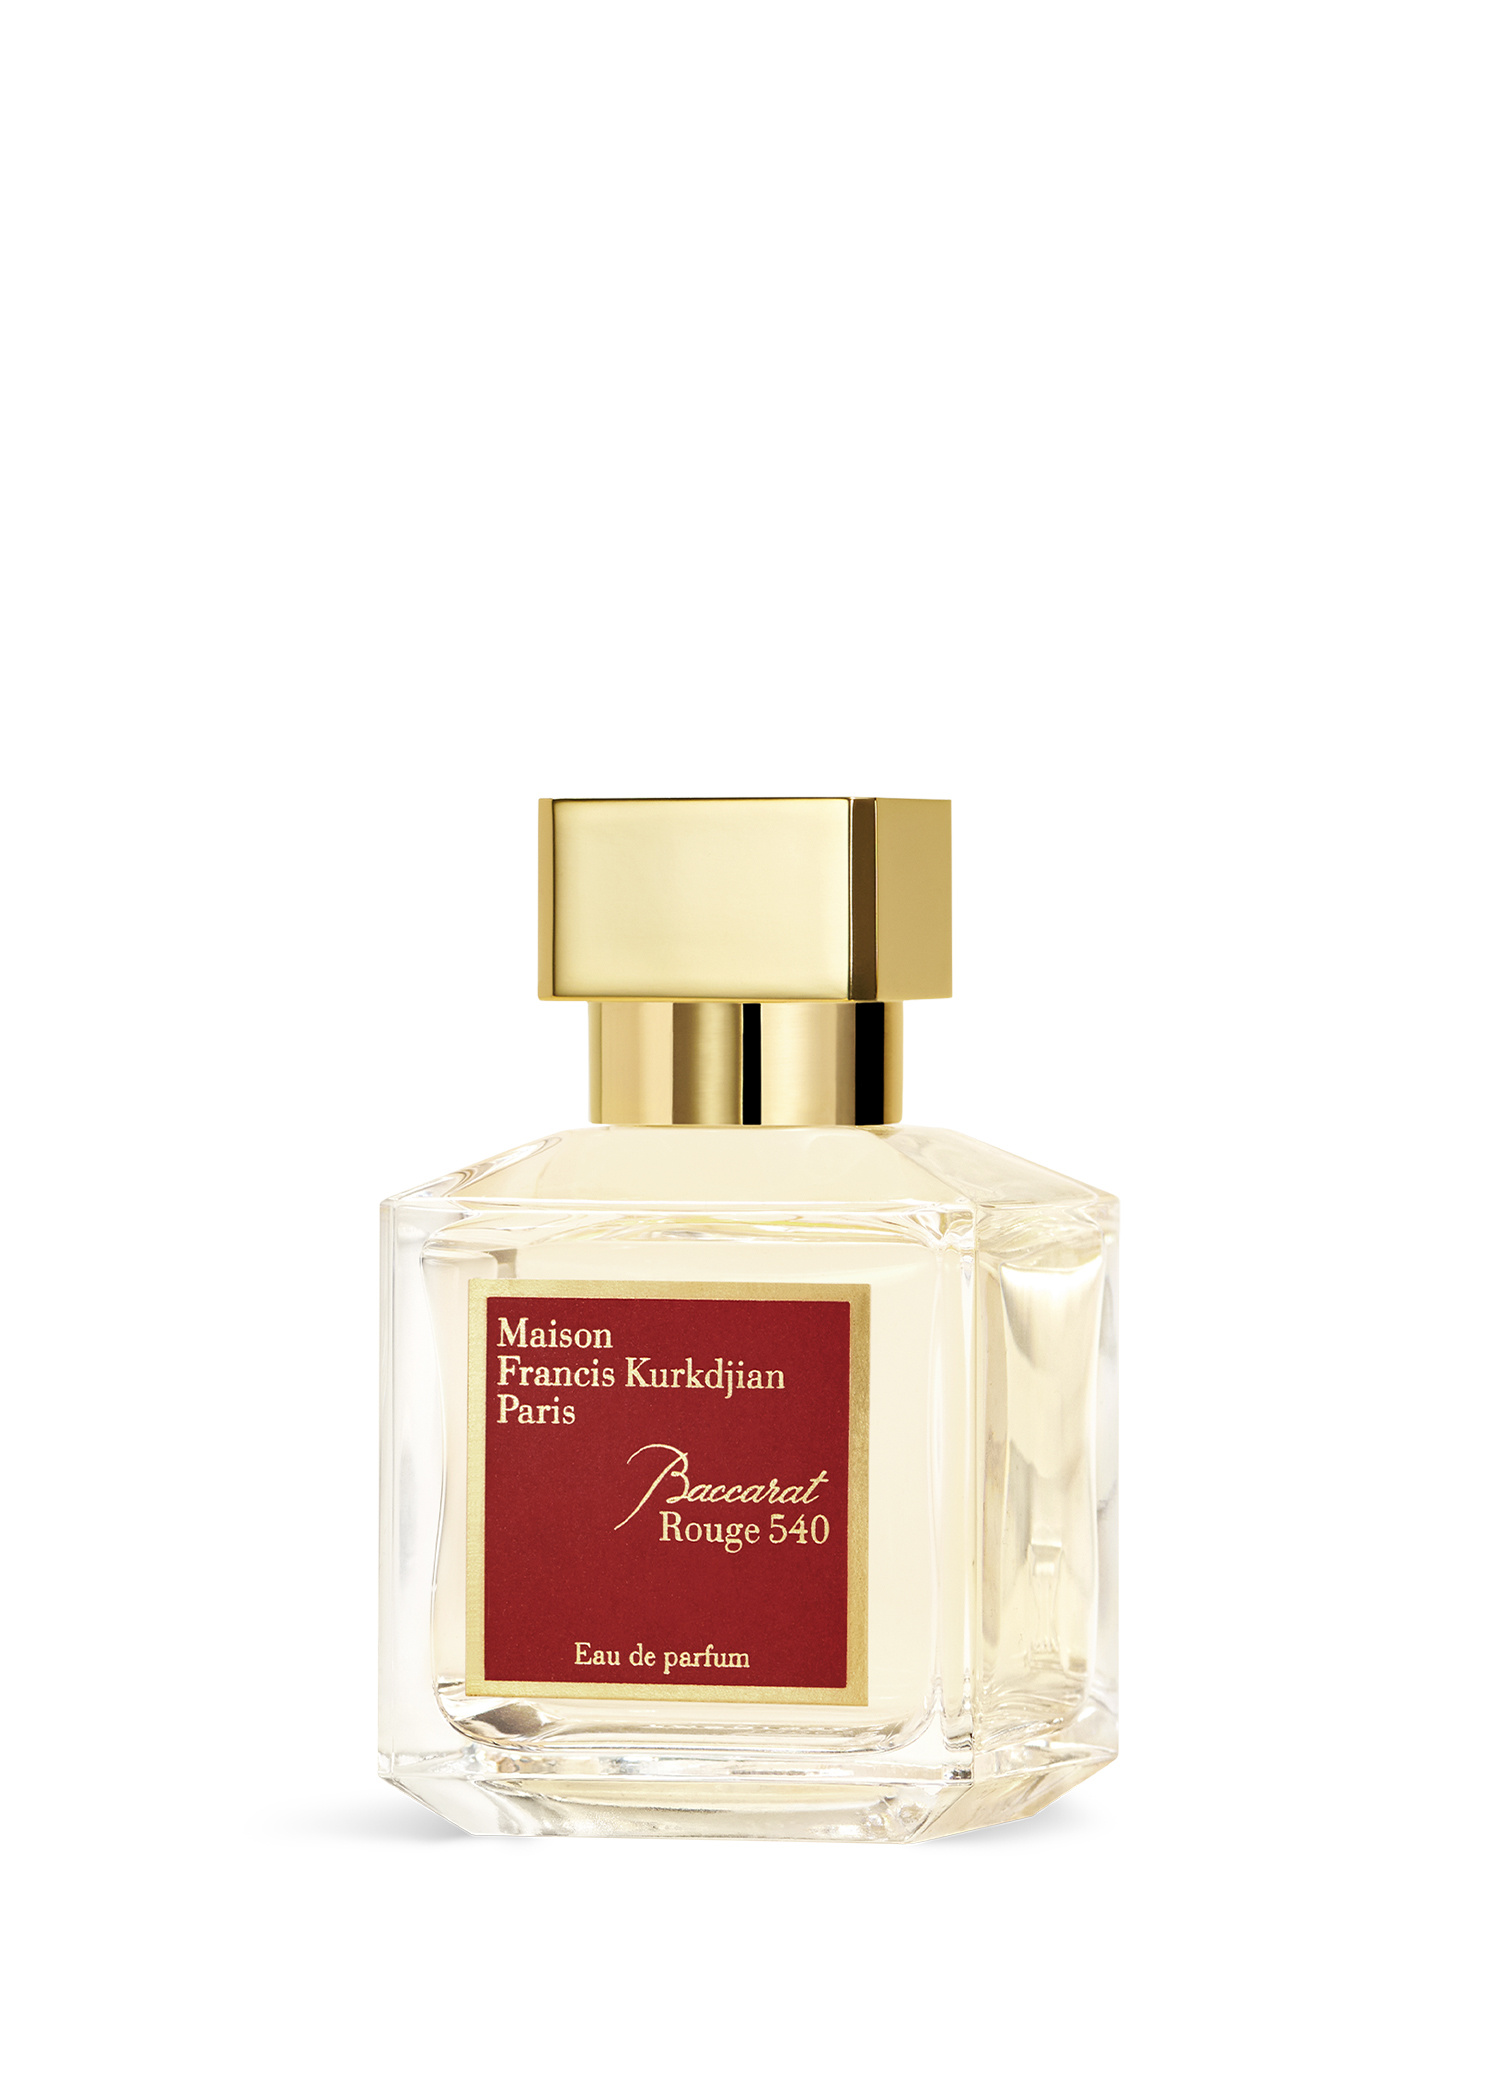 Maison Francis Kurkdjian - Baccarat Rouge 540 Eau de parfum 70ml -